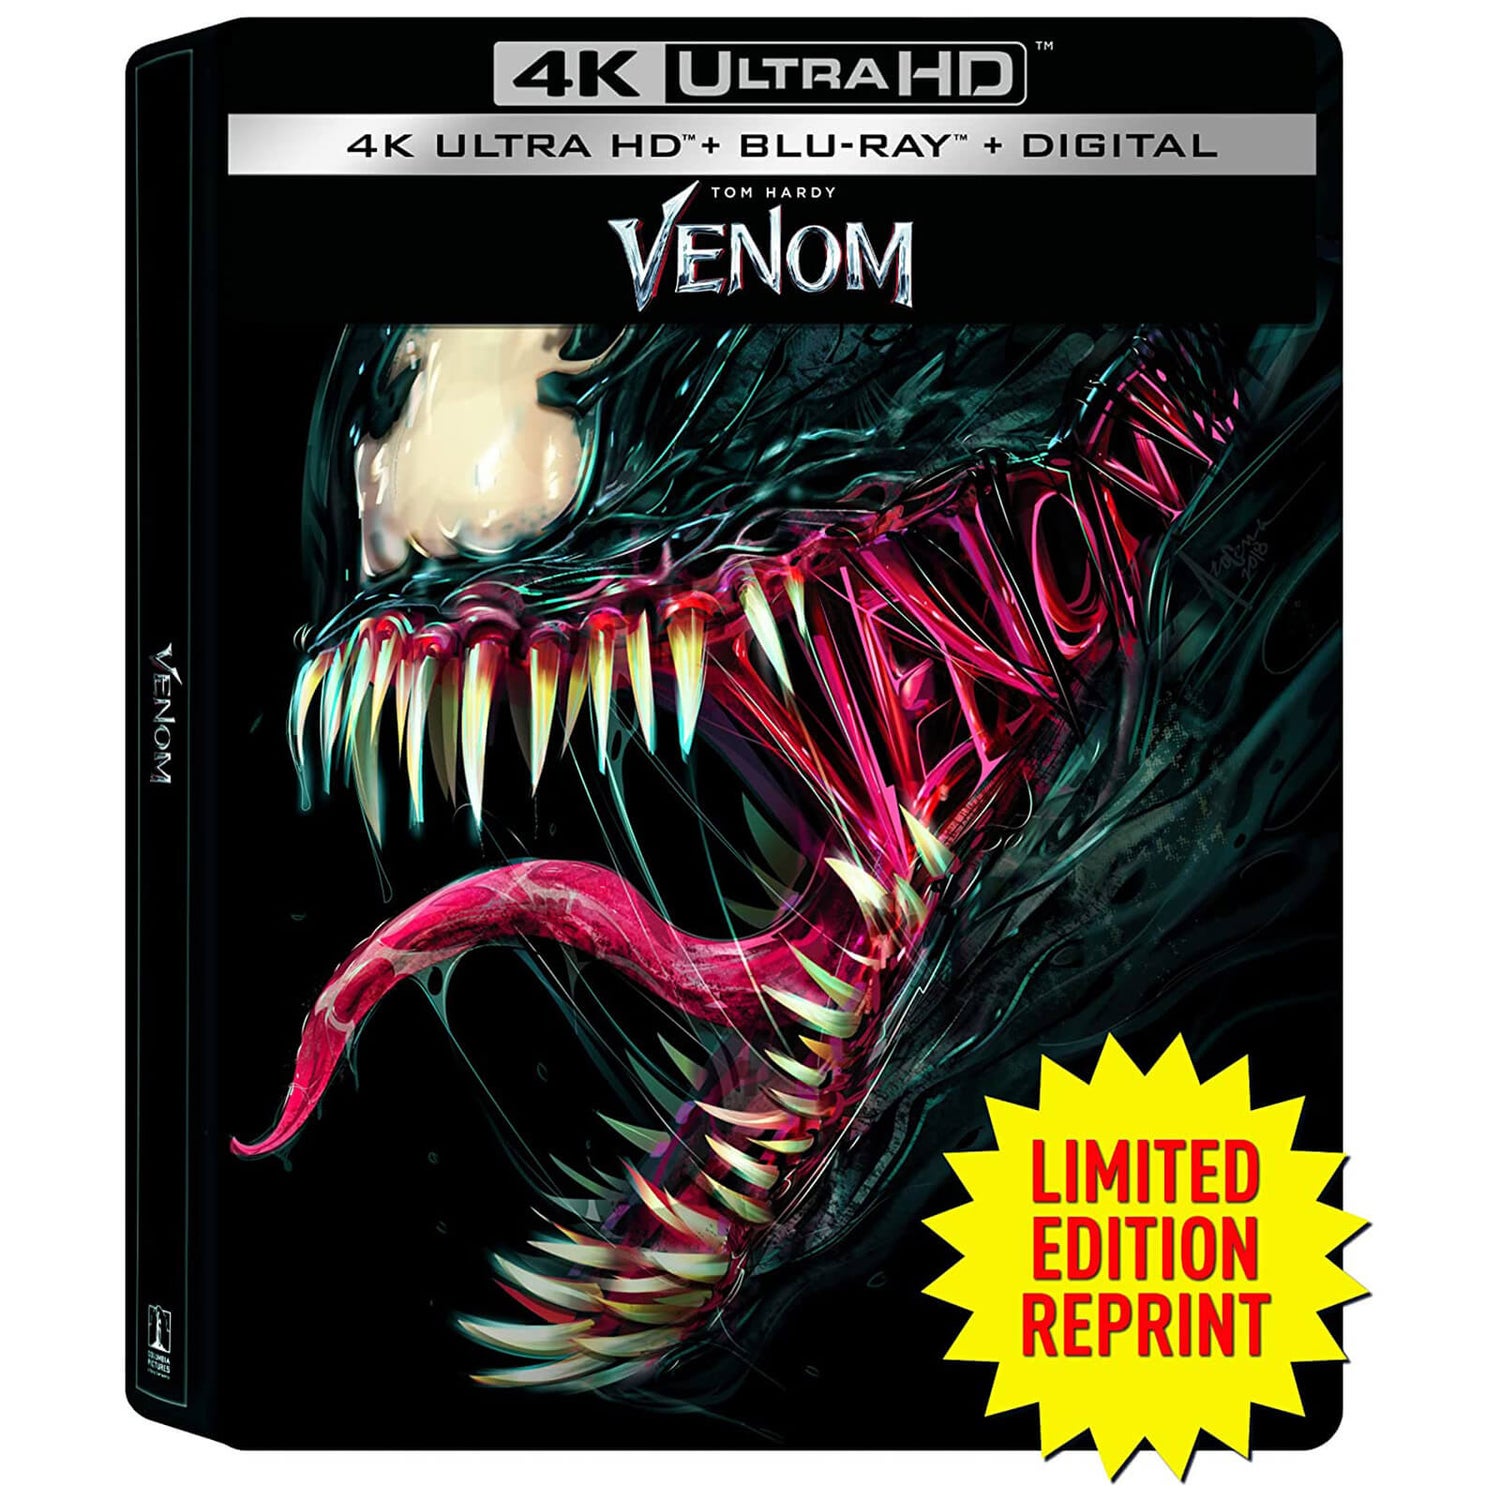 Venom Limited Edition 4K Ultra HD (Includes Blu-ray + Digital) (US Import)